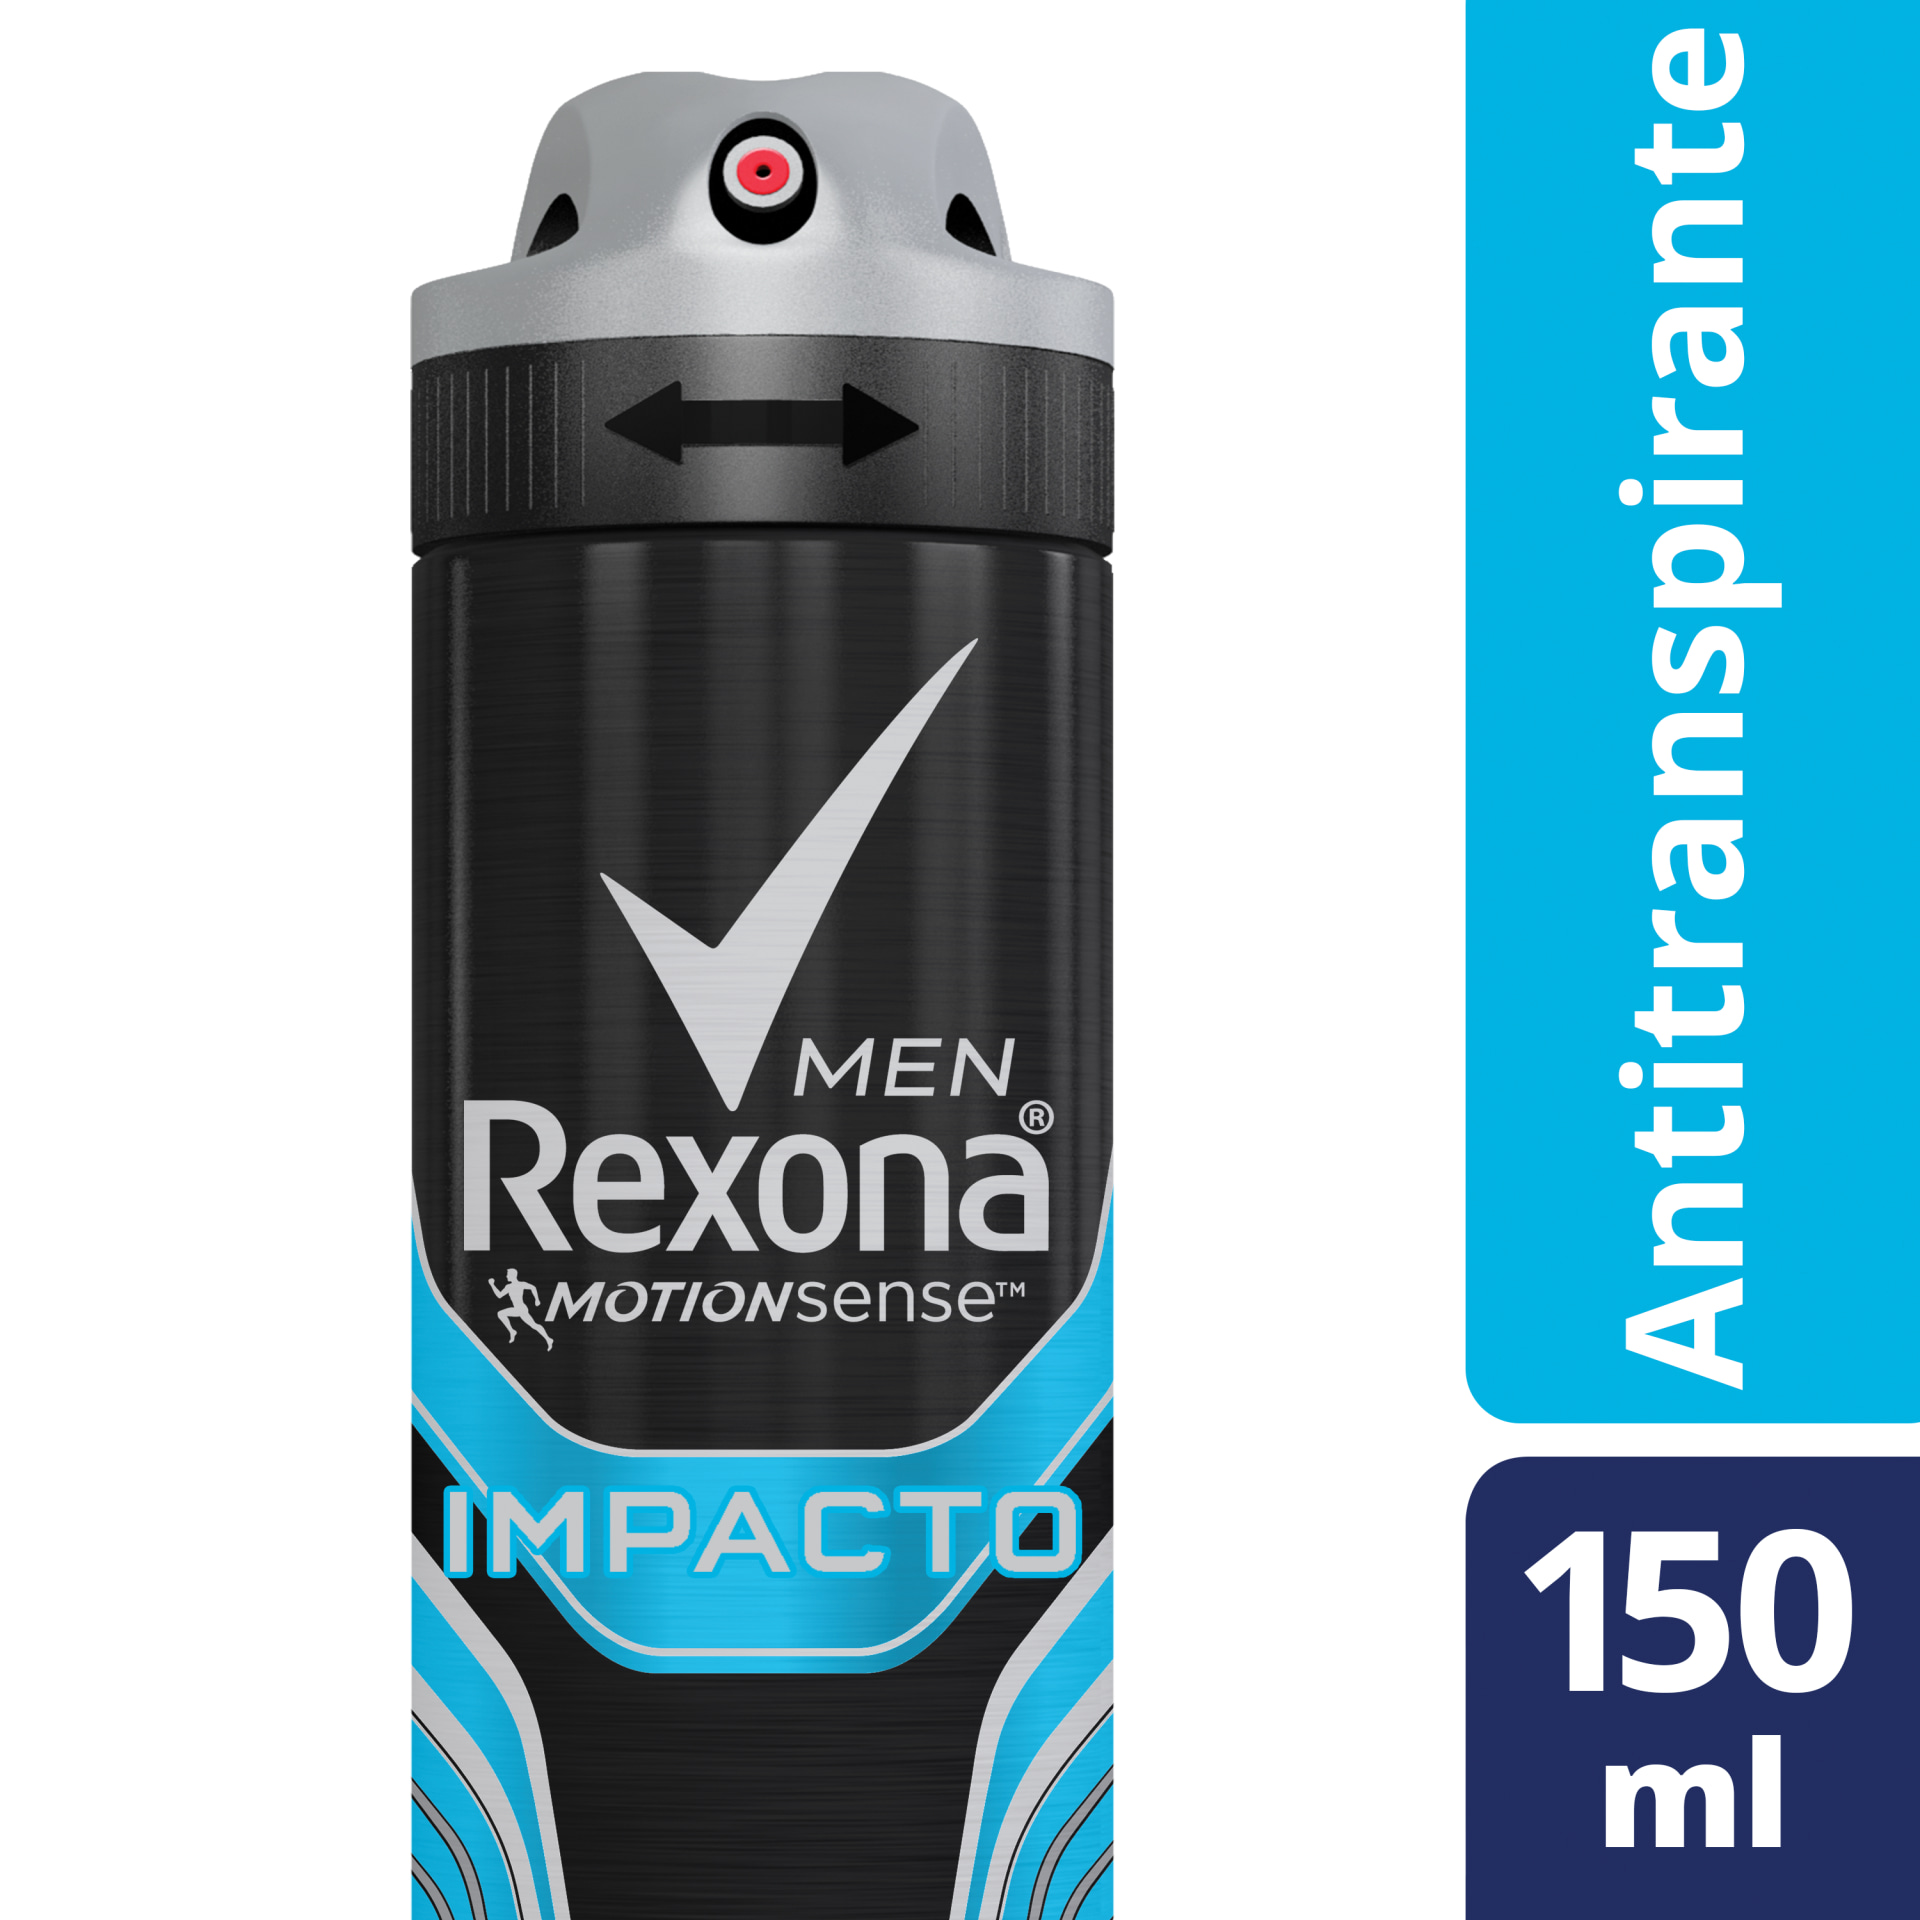 Desodorante Rexona Impacto Aerosol 150ml